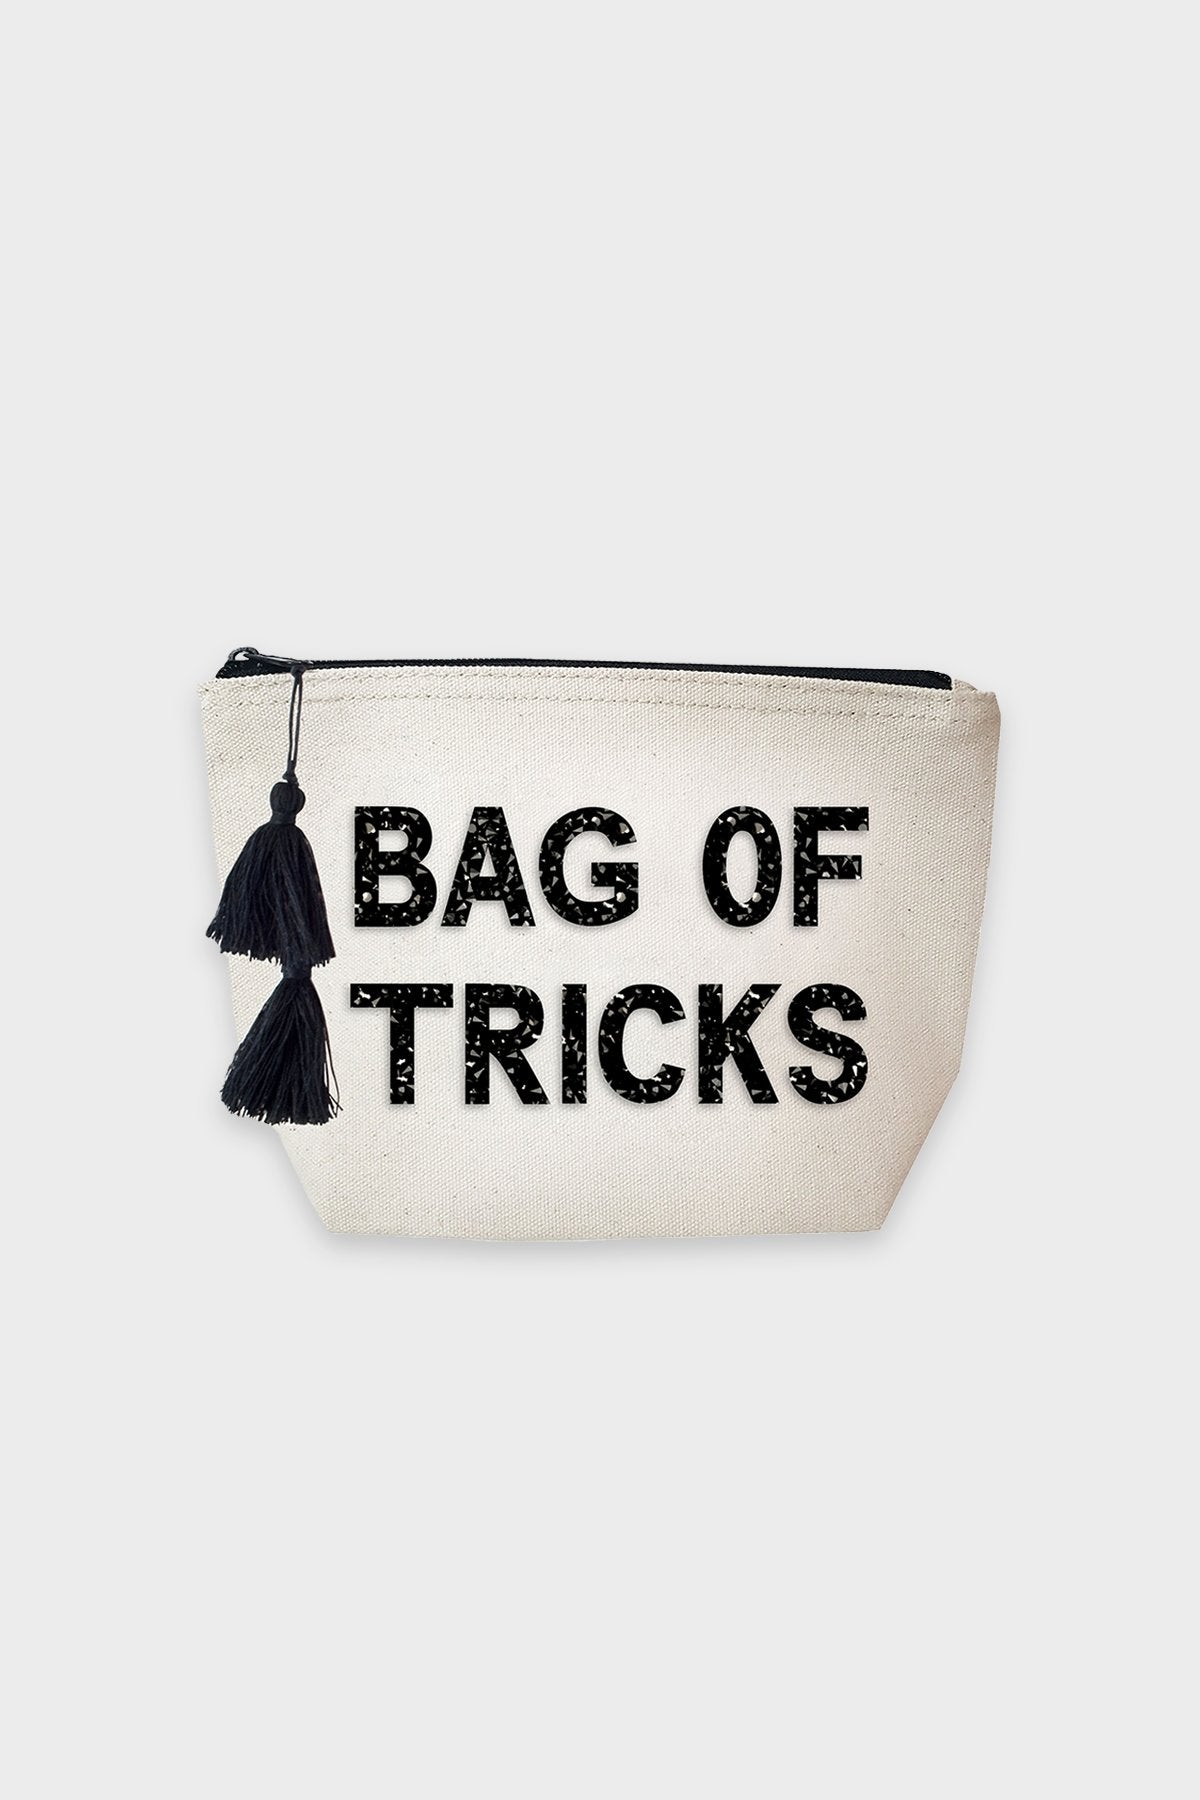 Bag of Tricks Cosmetic Bag in Black Crystal - shop-olivia.com